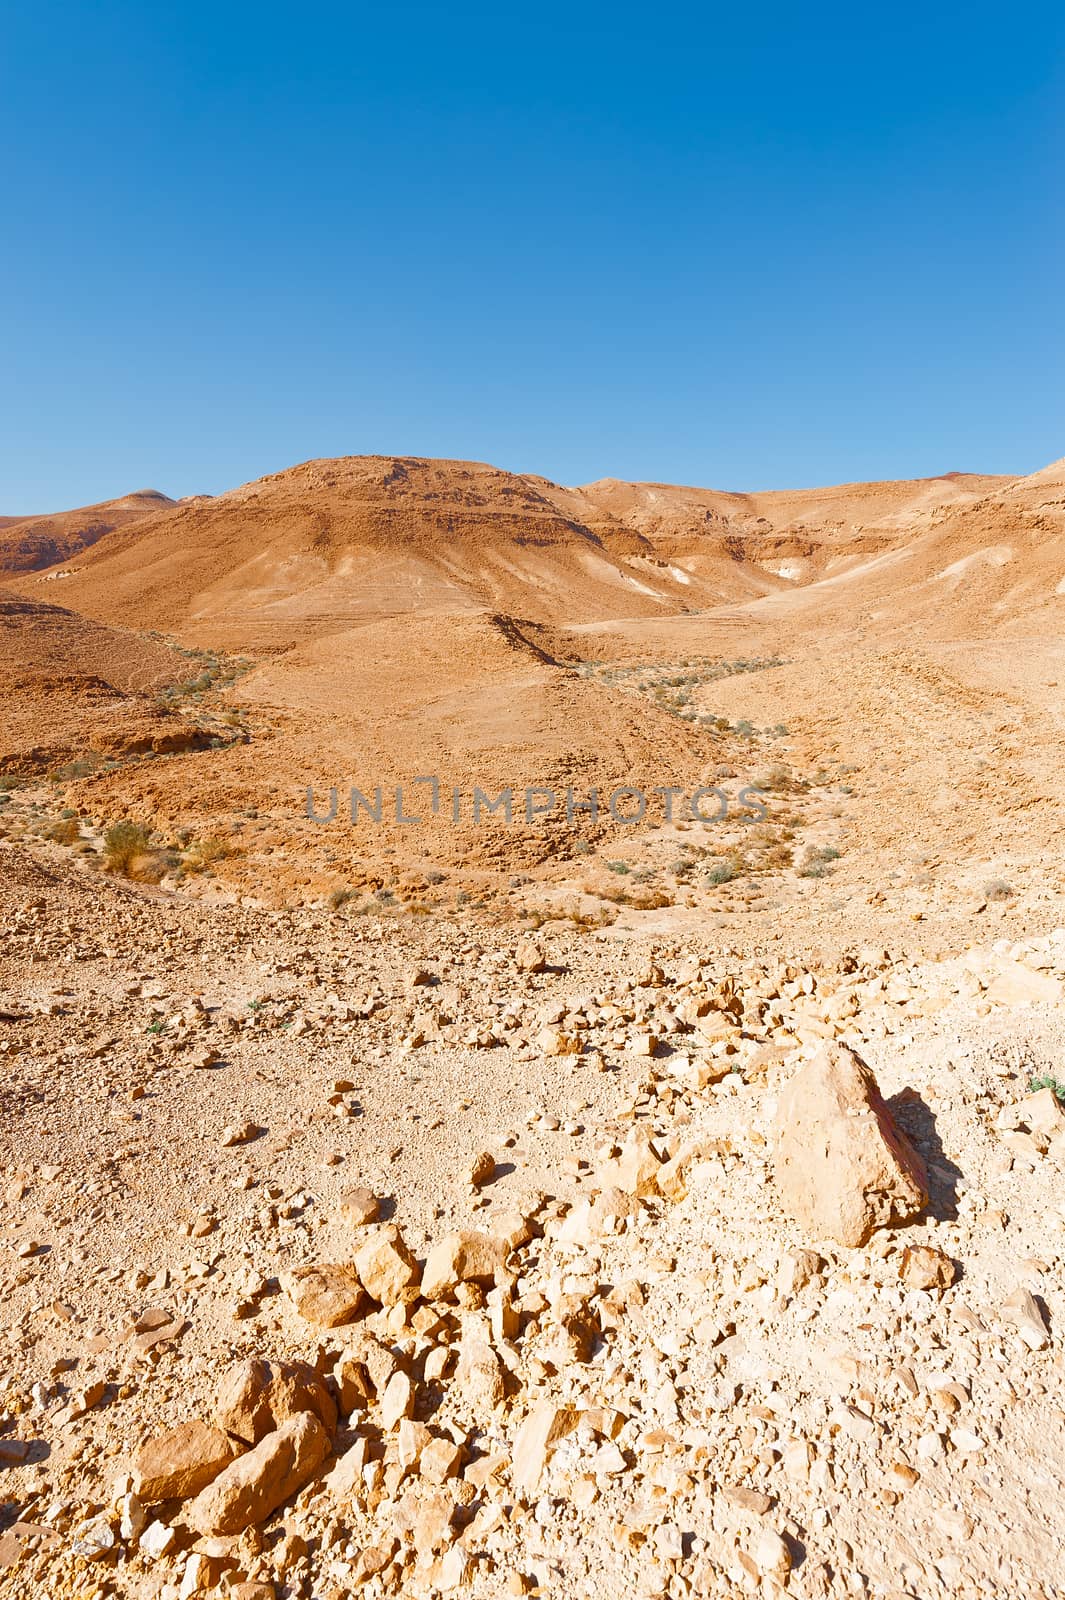 Hills of the Negev Desert in Israel